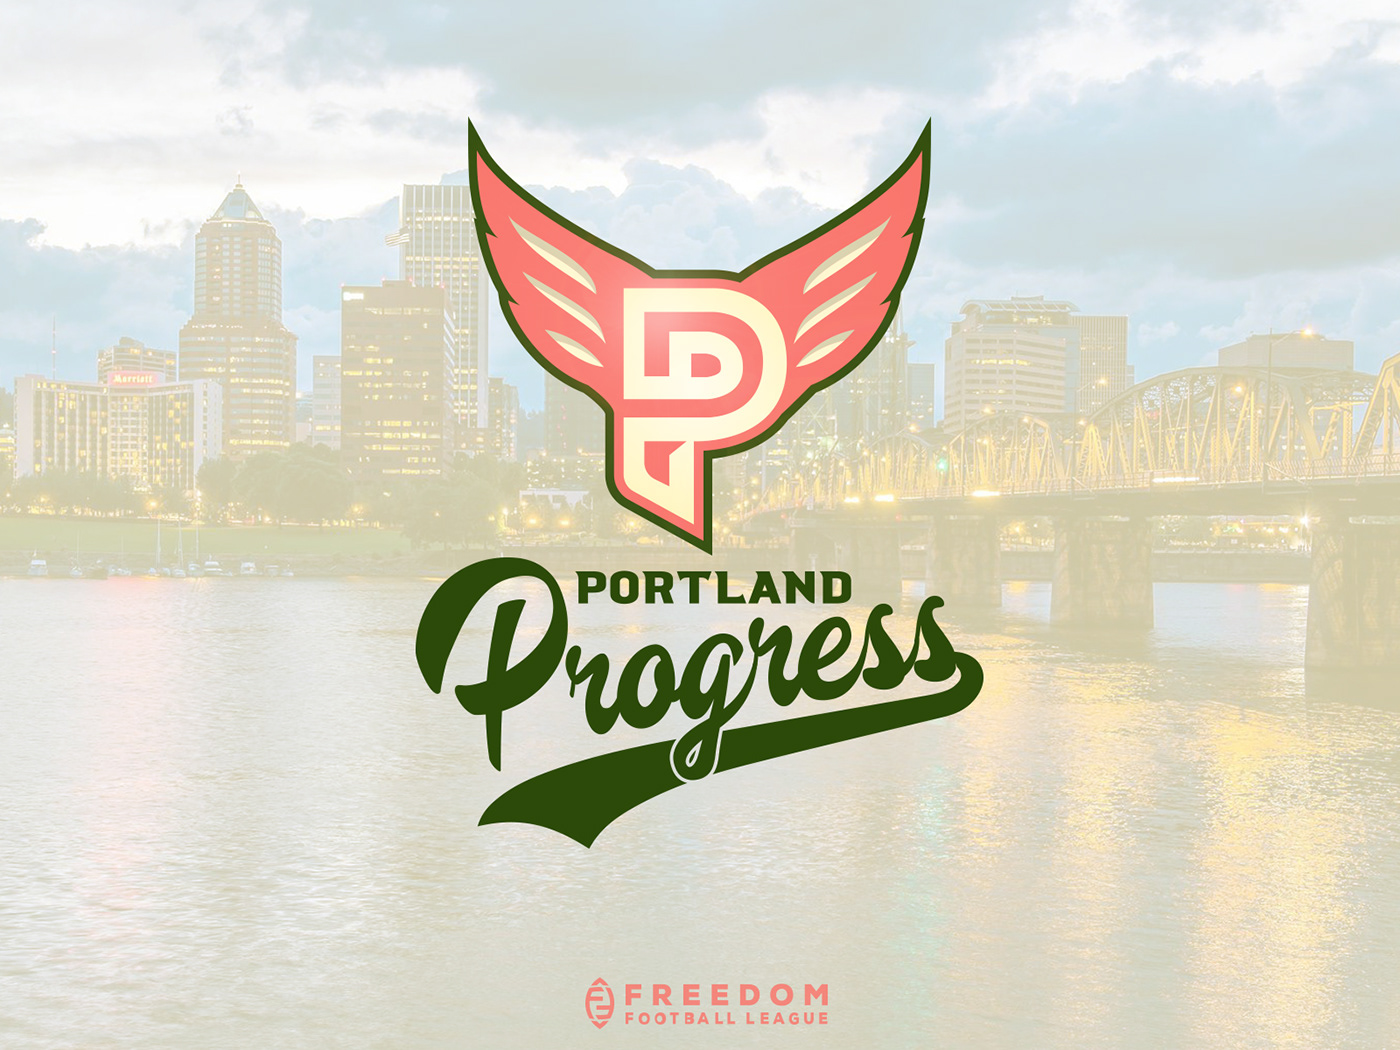 FFL nfl freedom progress Portland football XFL free speech Nike wings